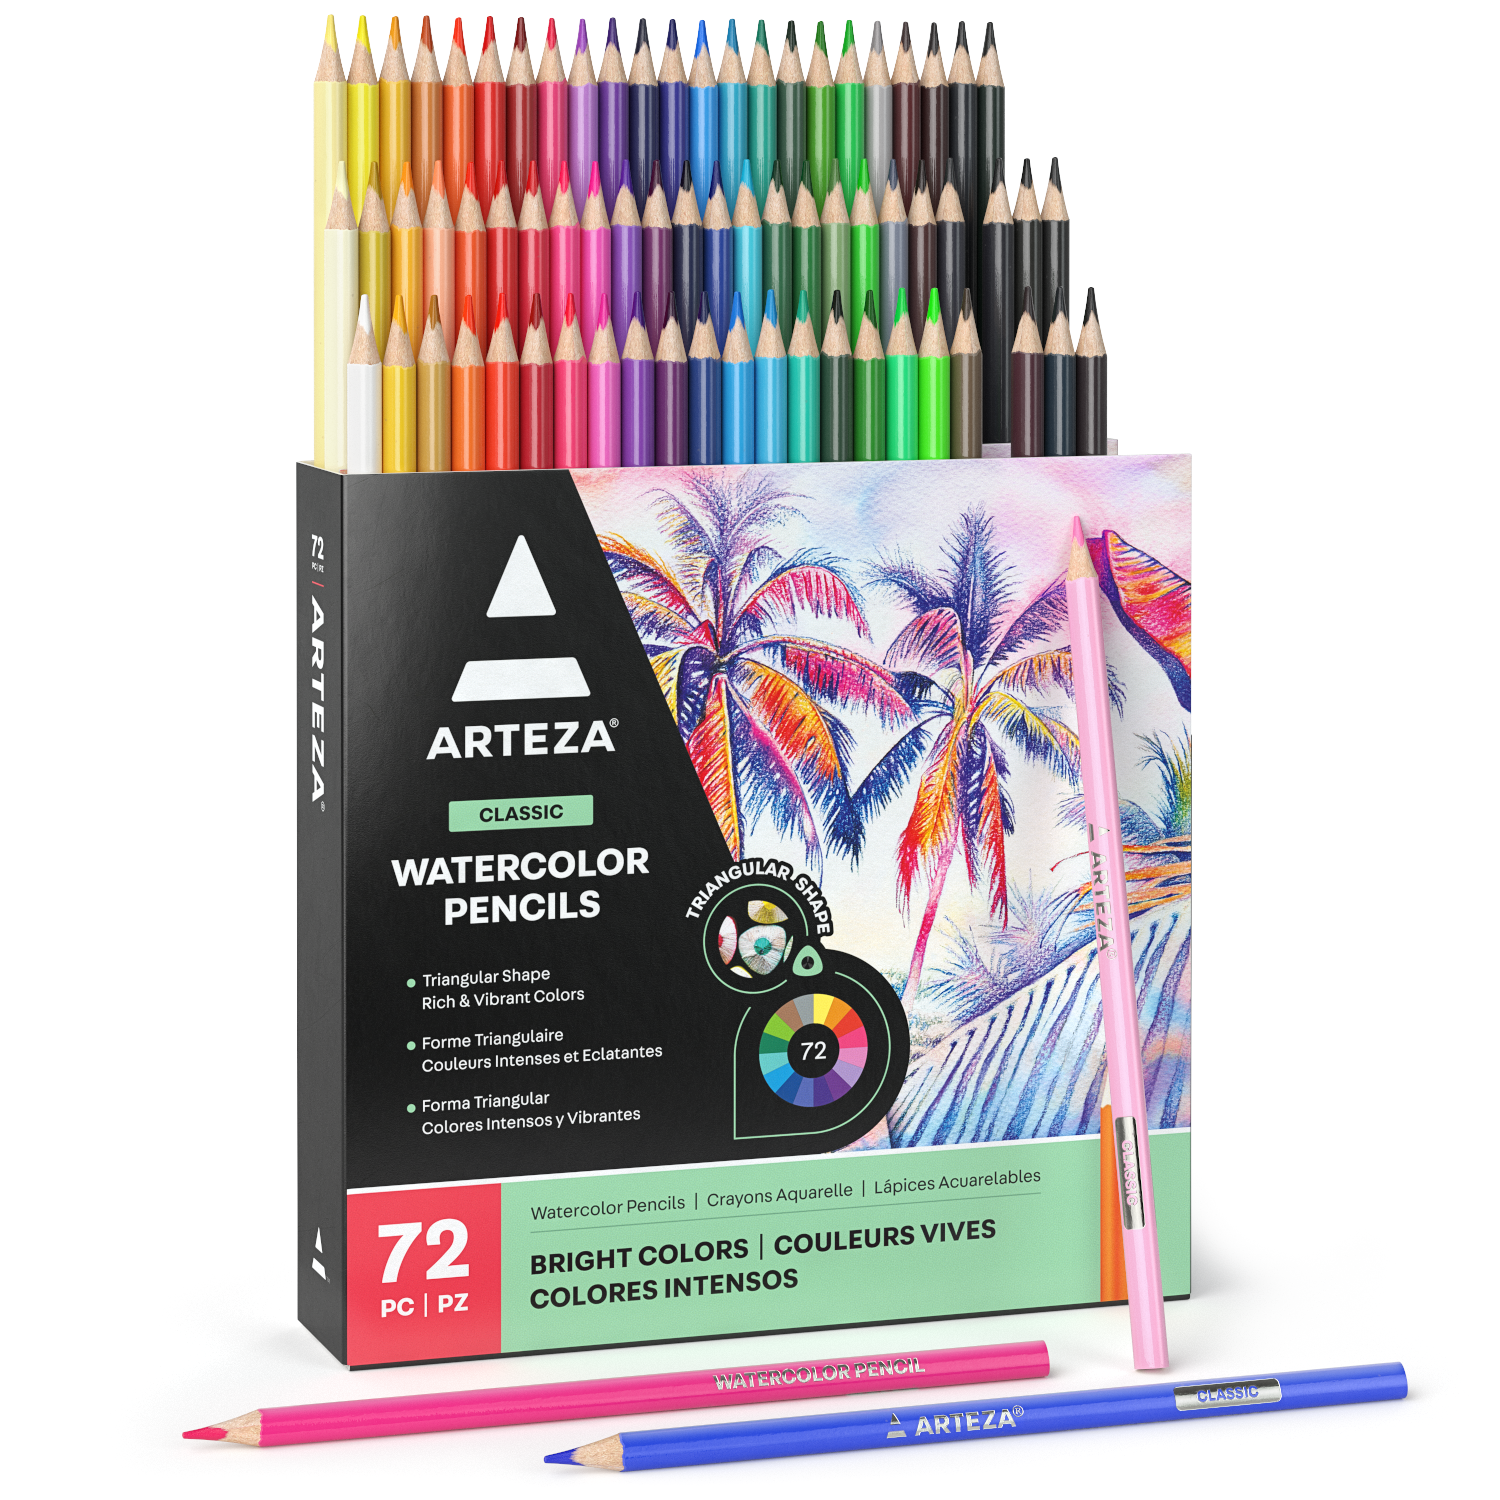 Castle Art Supplies 72 Watercolor Pencils Zip-Up Set for Adults